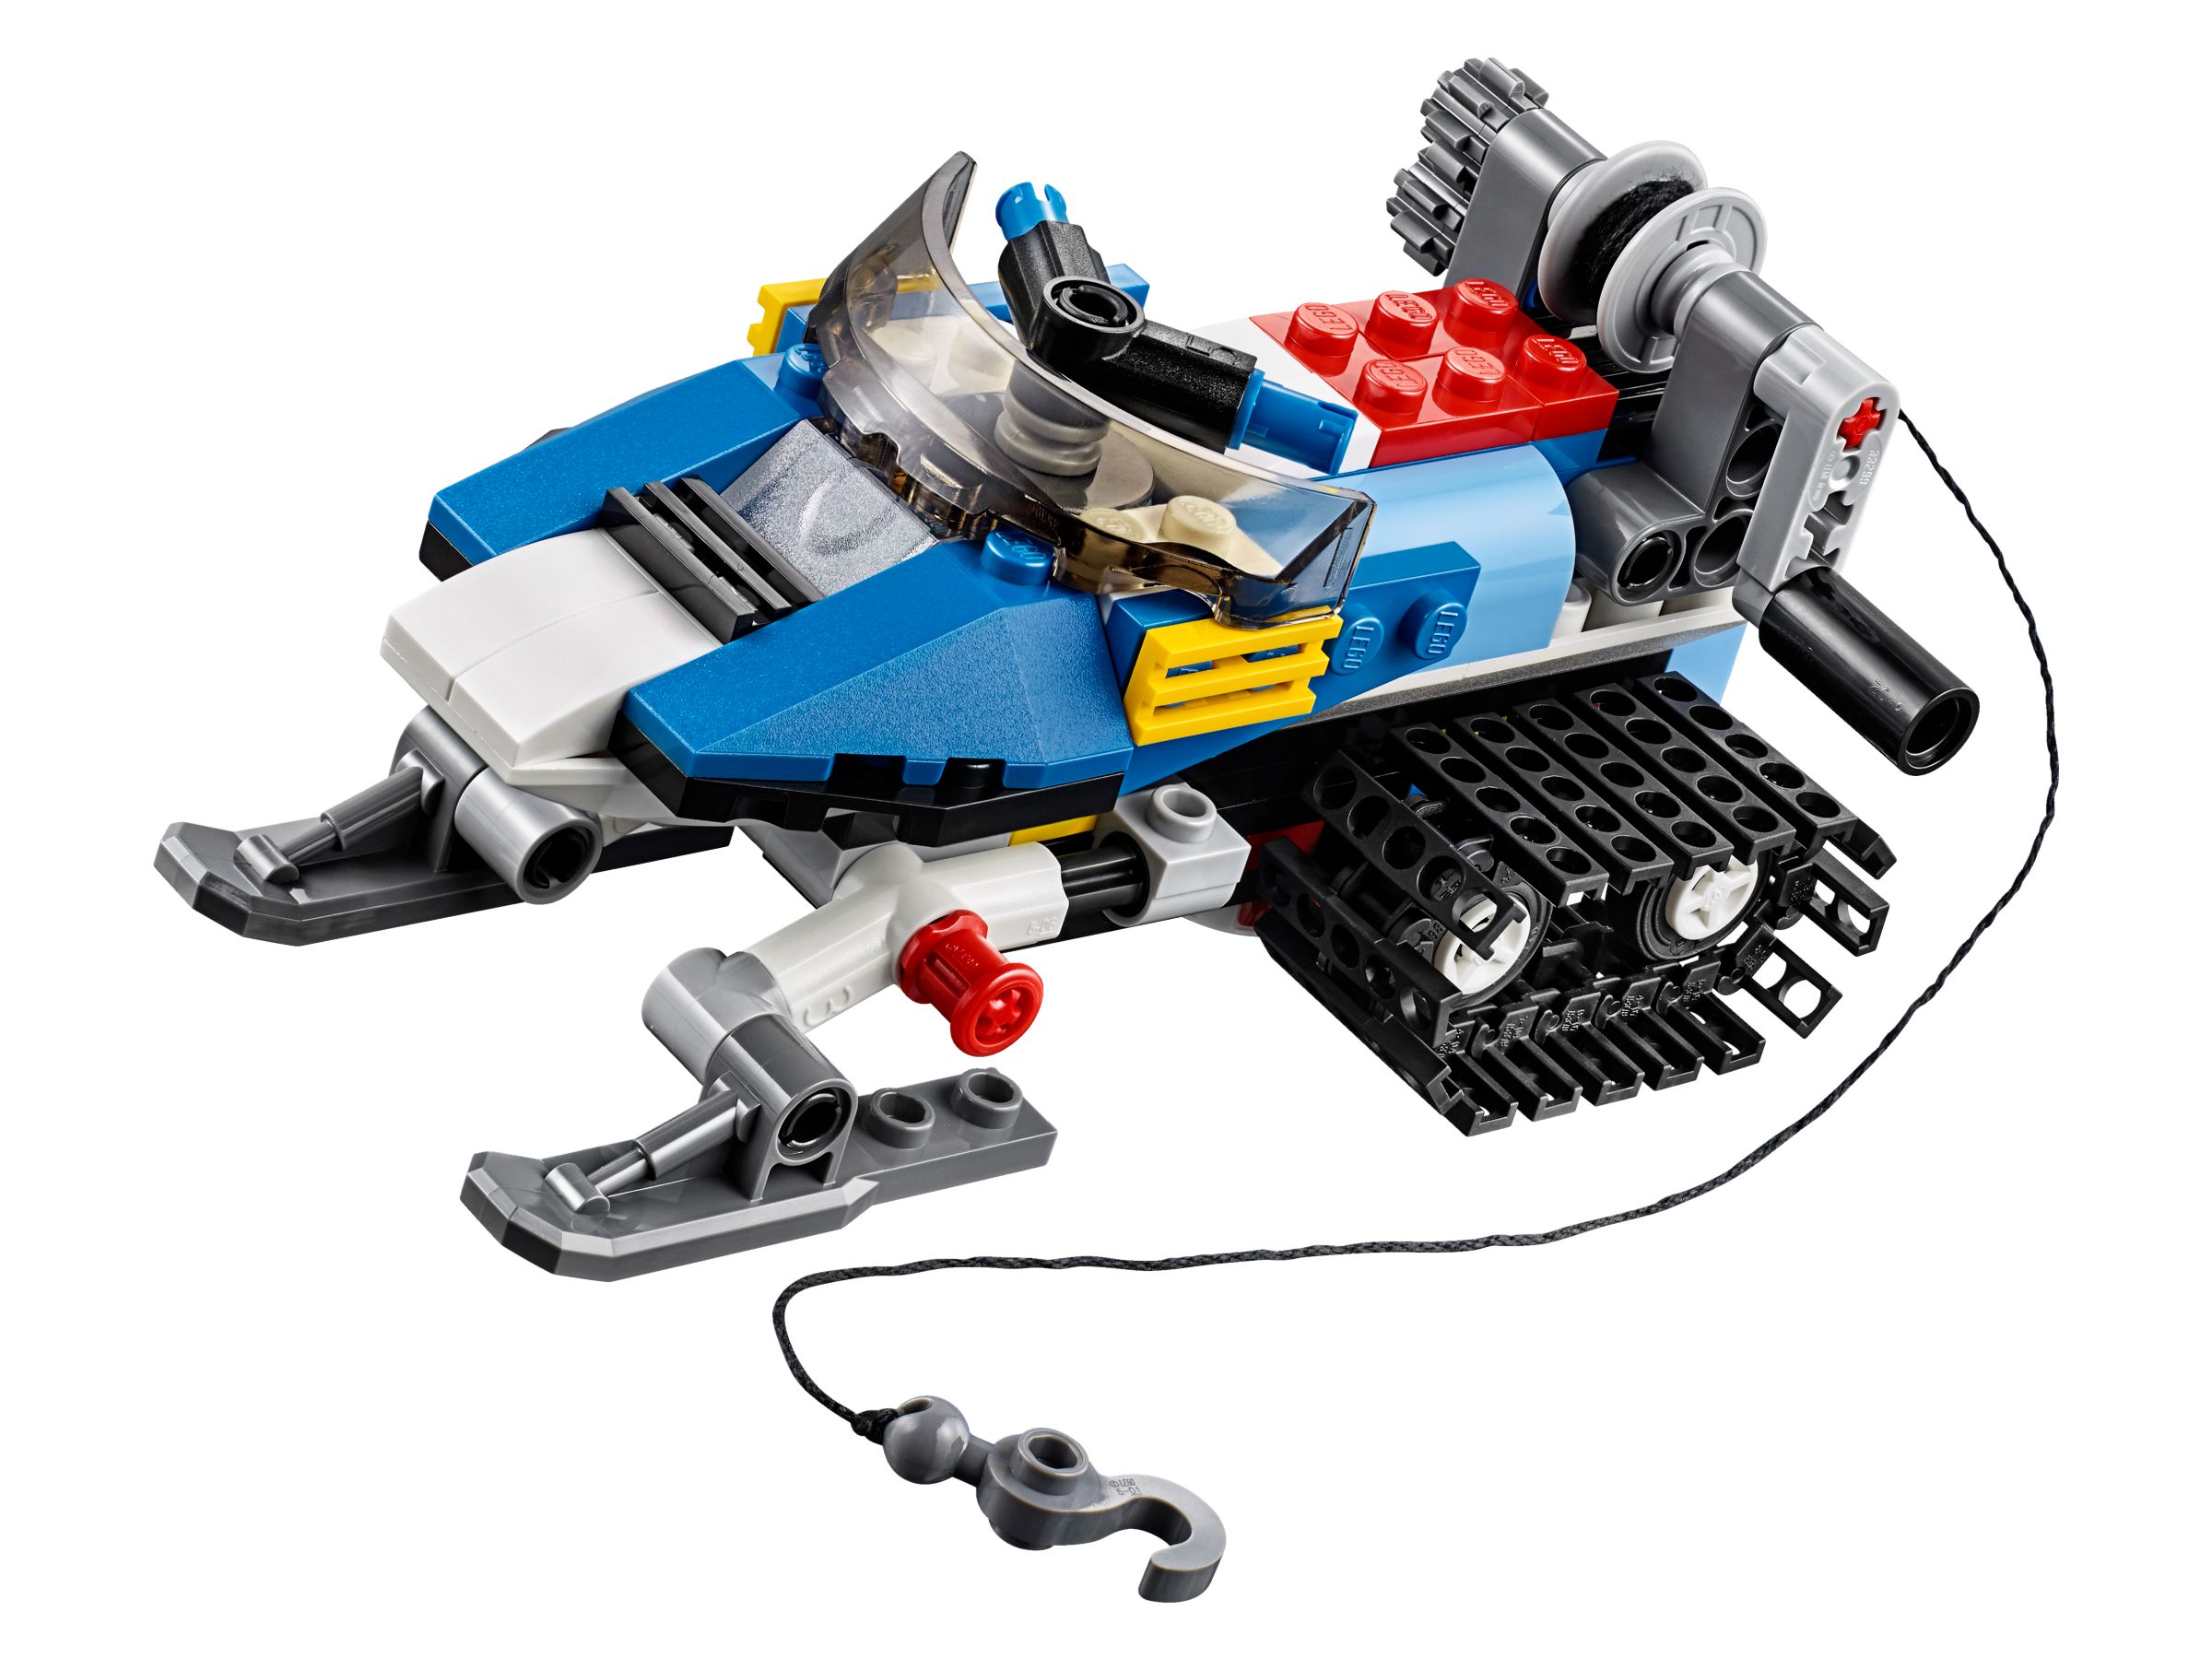 LEGO Creator 31049 Doppelrotor-Hubschrauber LEGO_31049_alt5.jpg